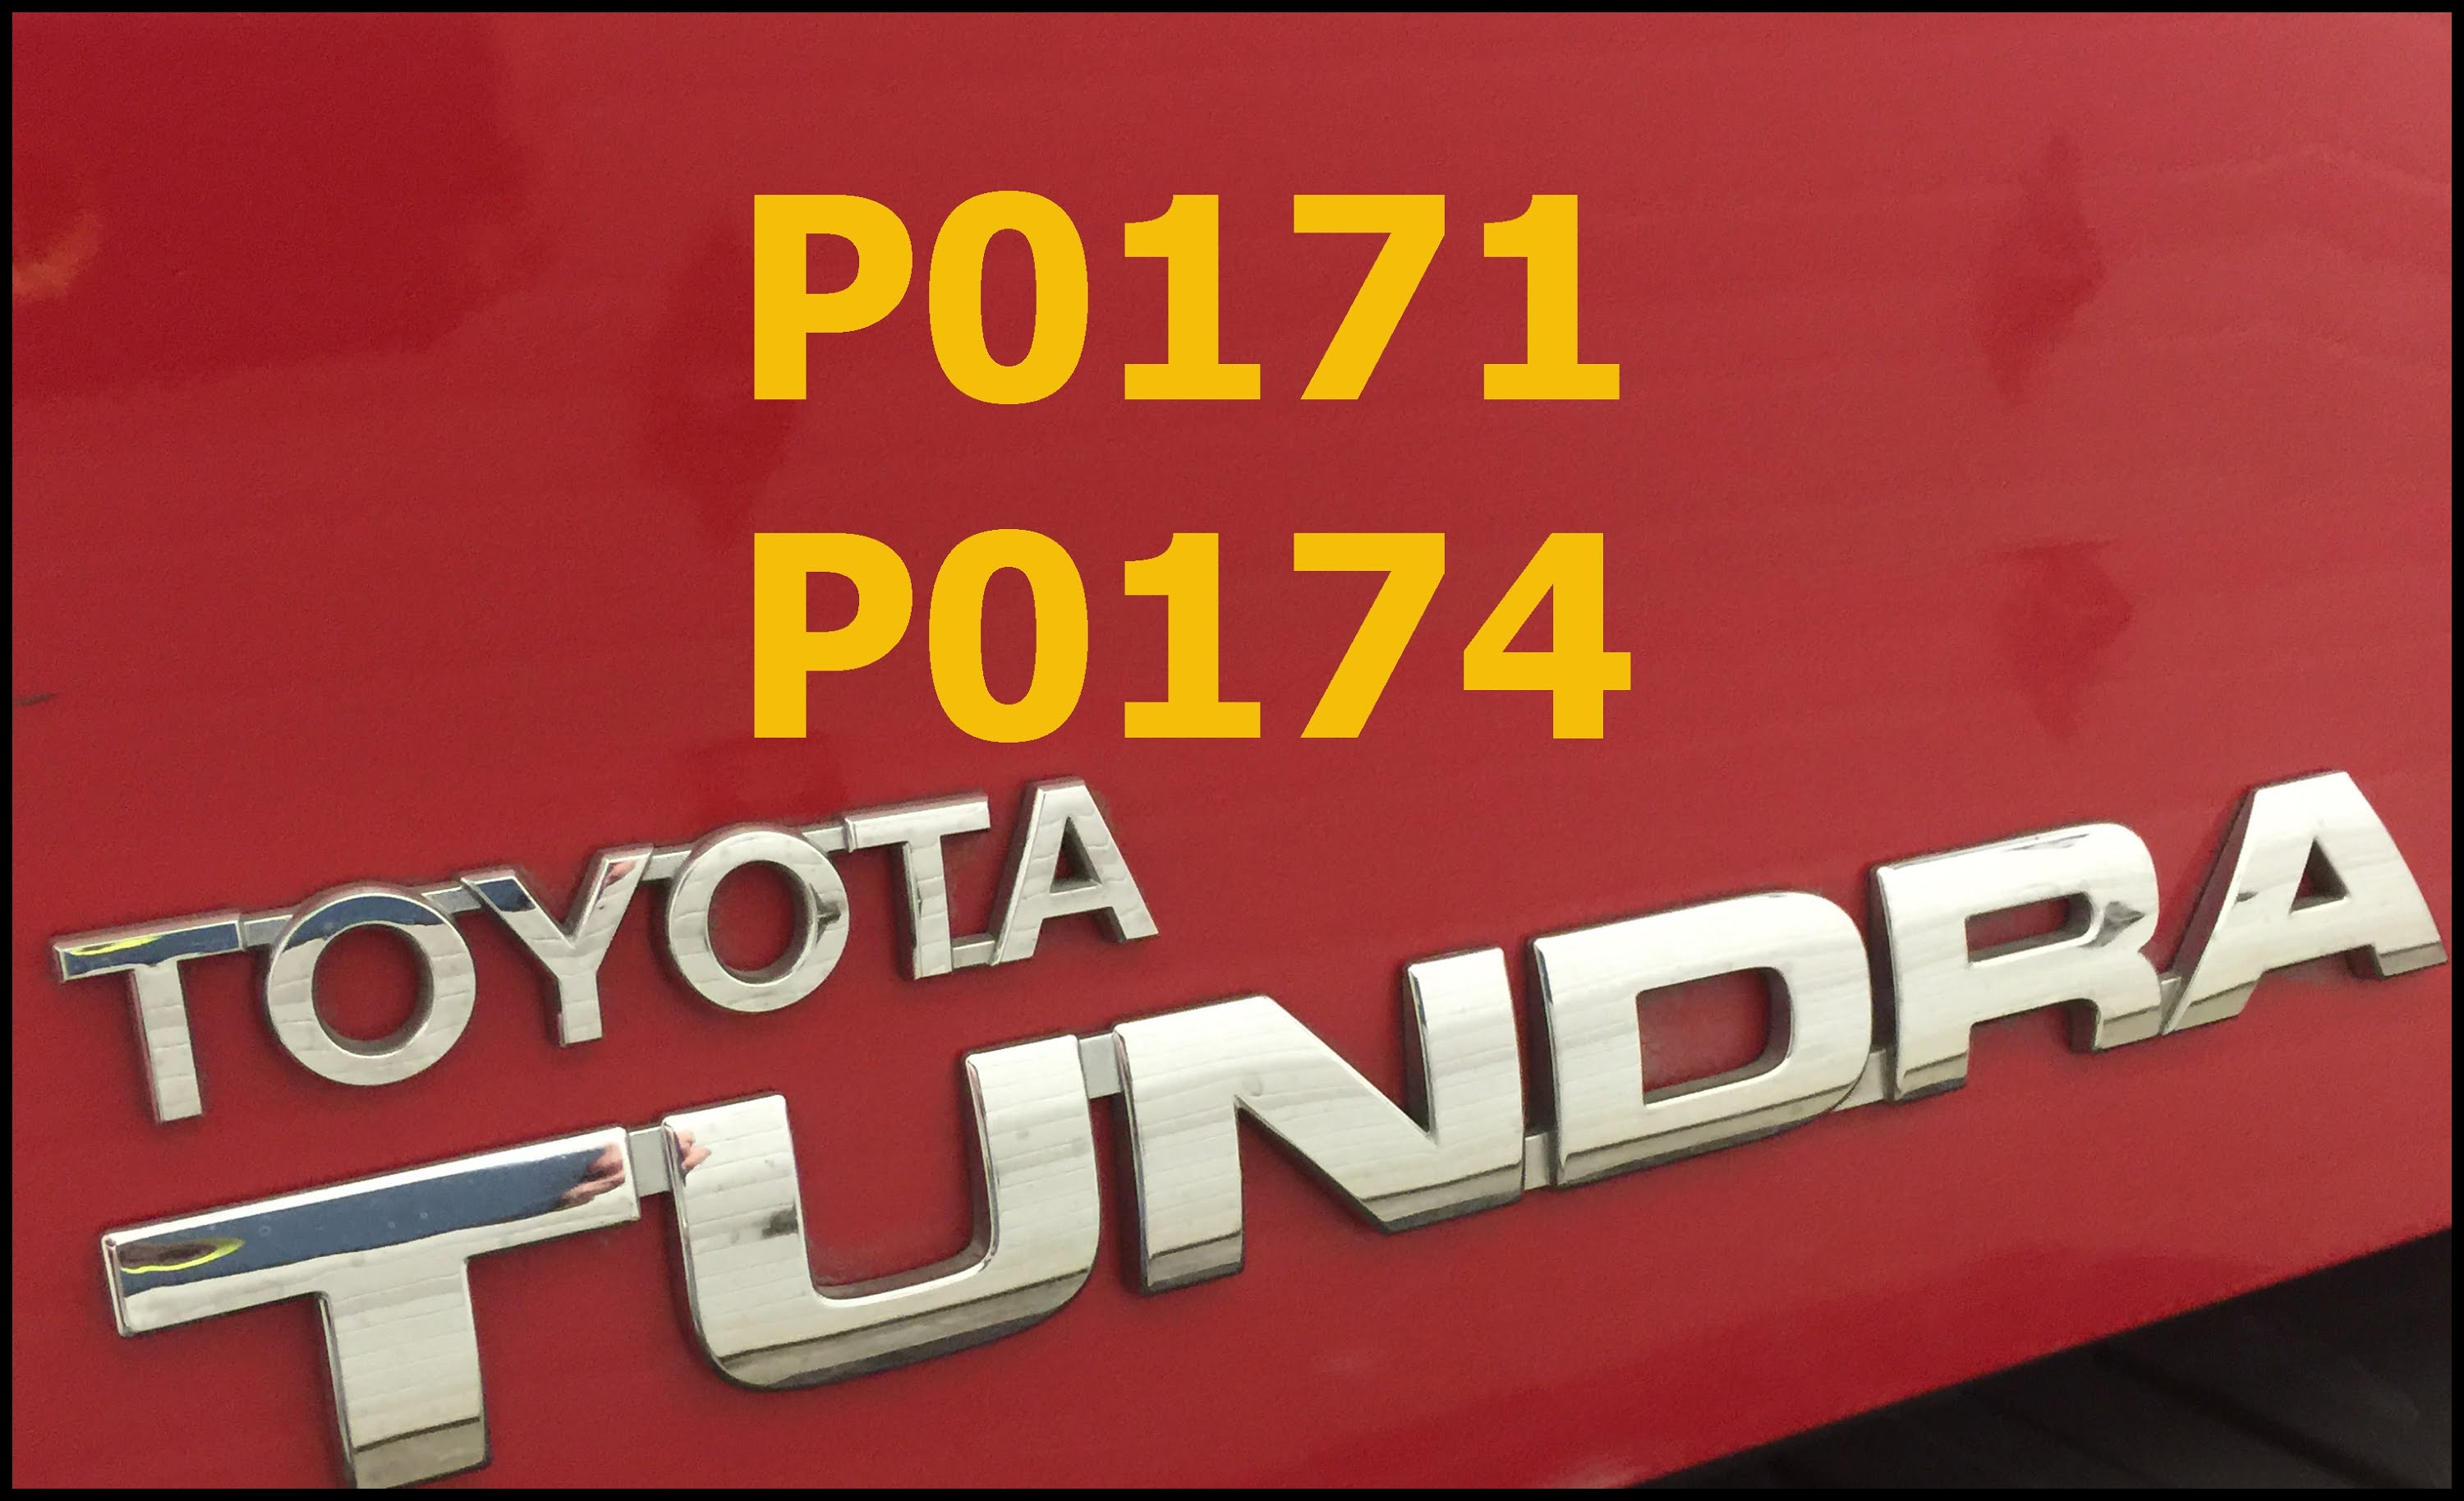 Toyota Tundra P0171 P0174 Lean Codes